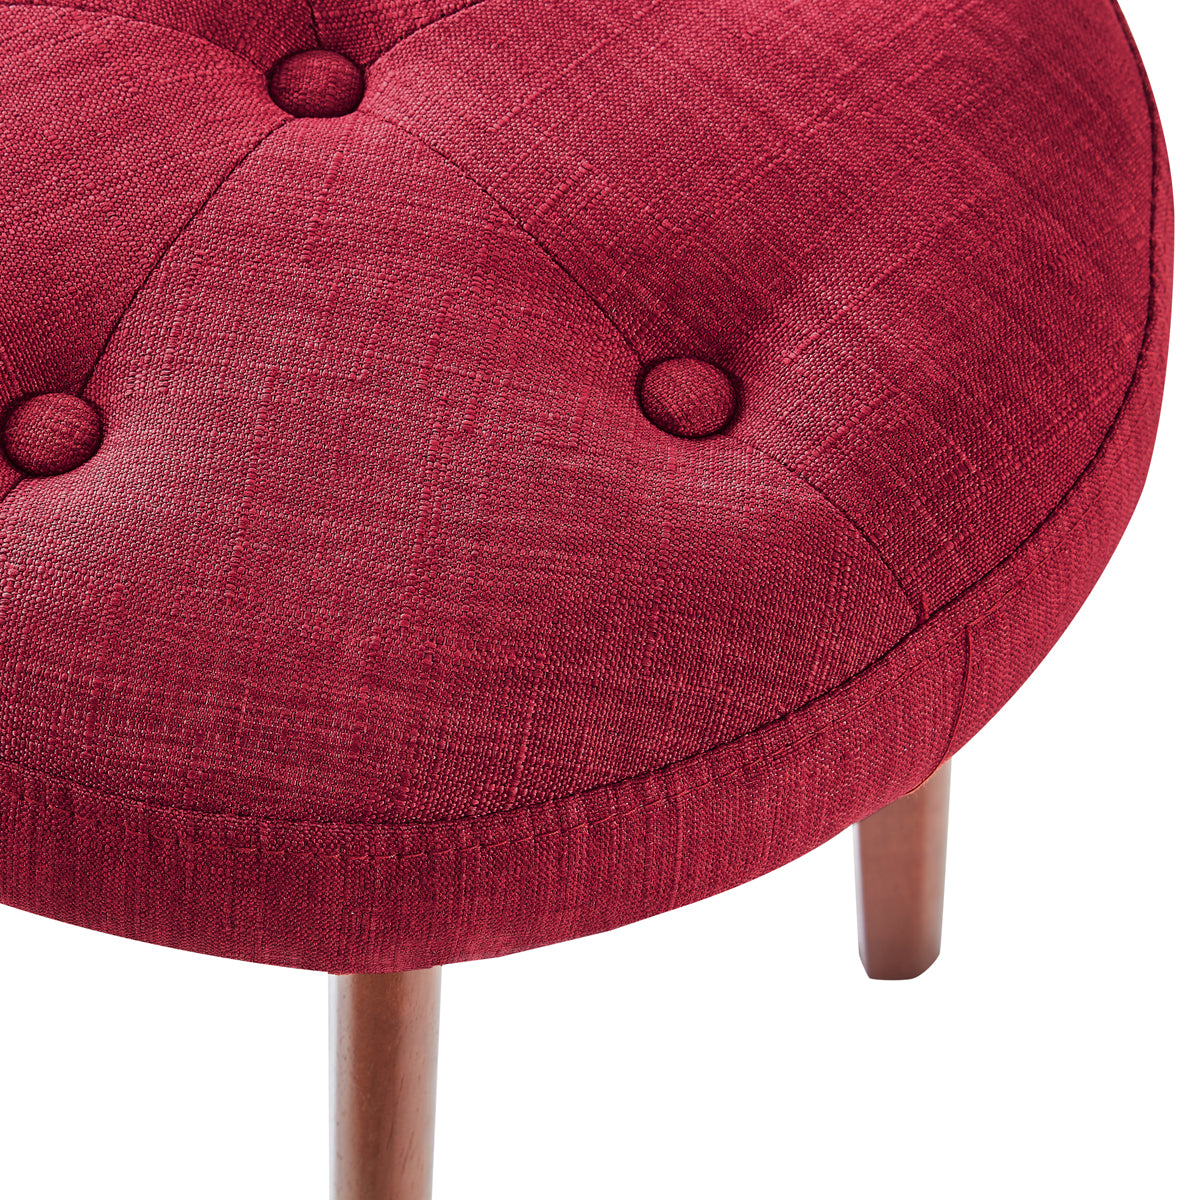 12.4'' Wide Round Footstool Ottoman Latitude Run Body Fabric: Orange Linen